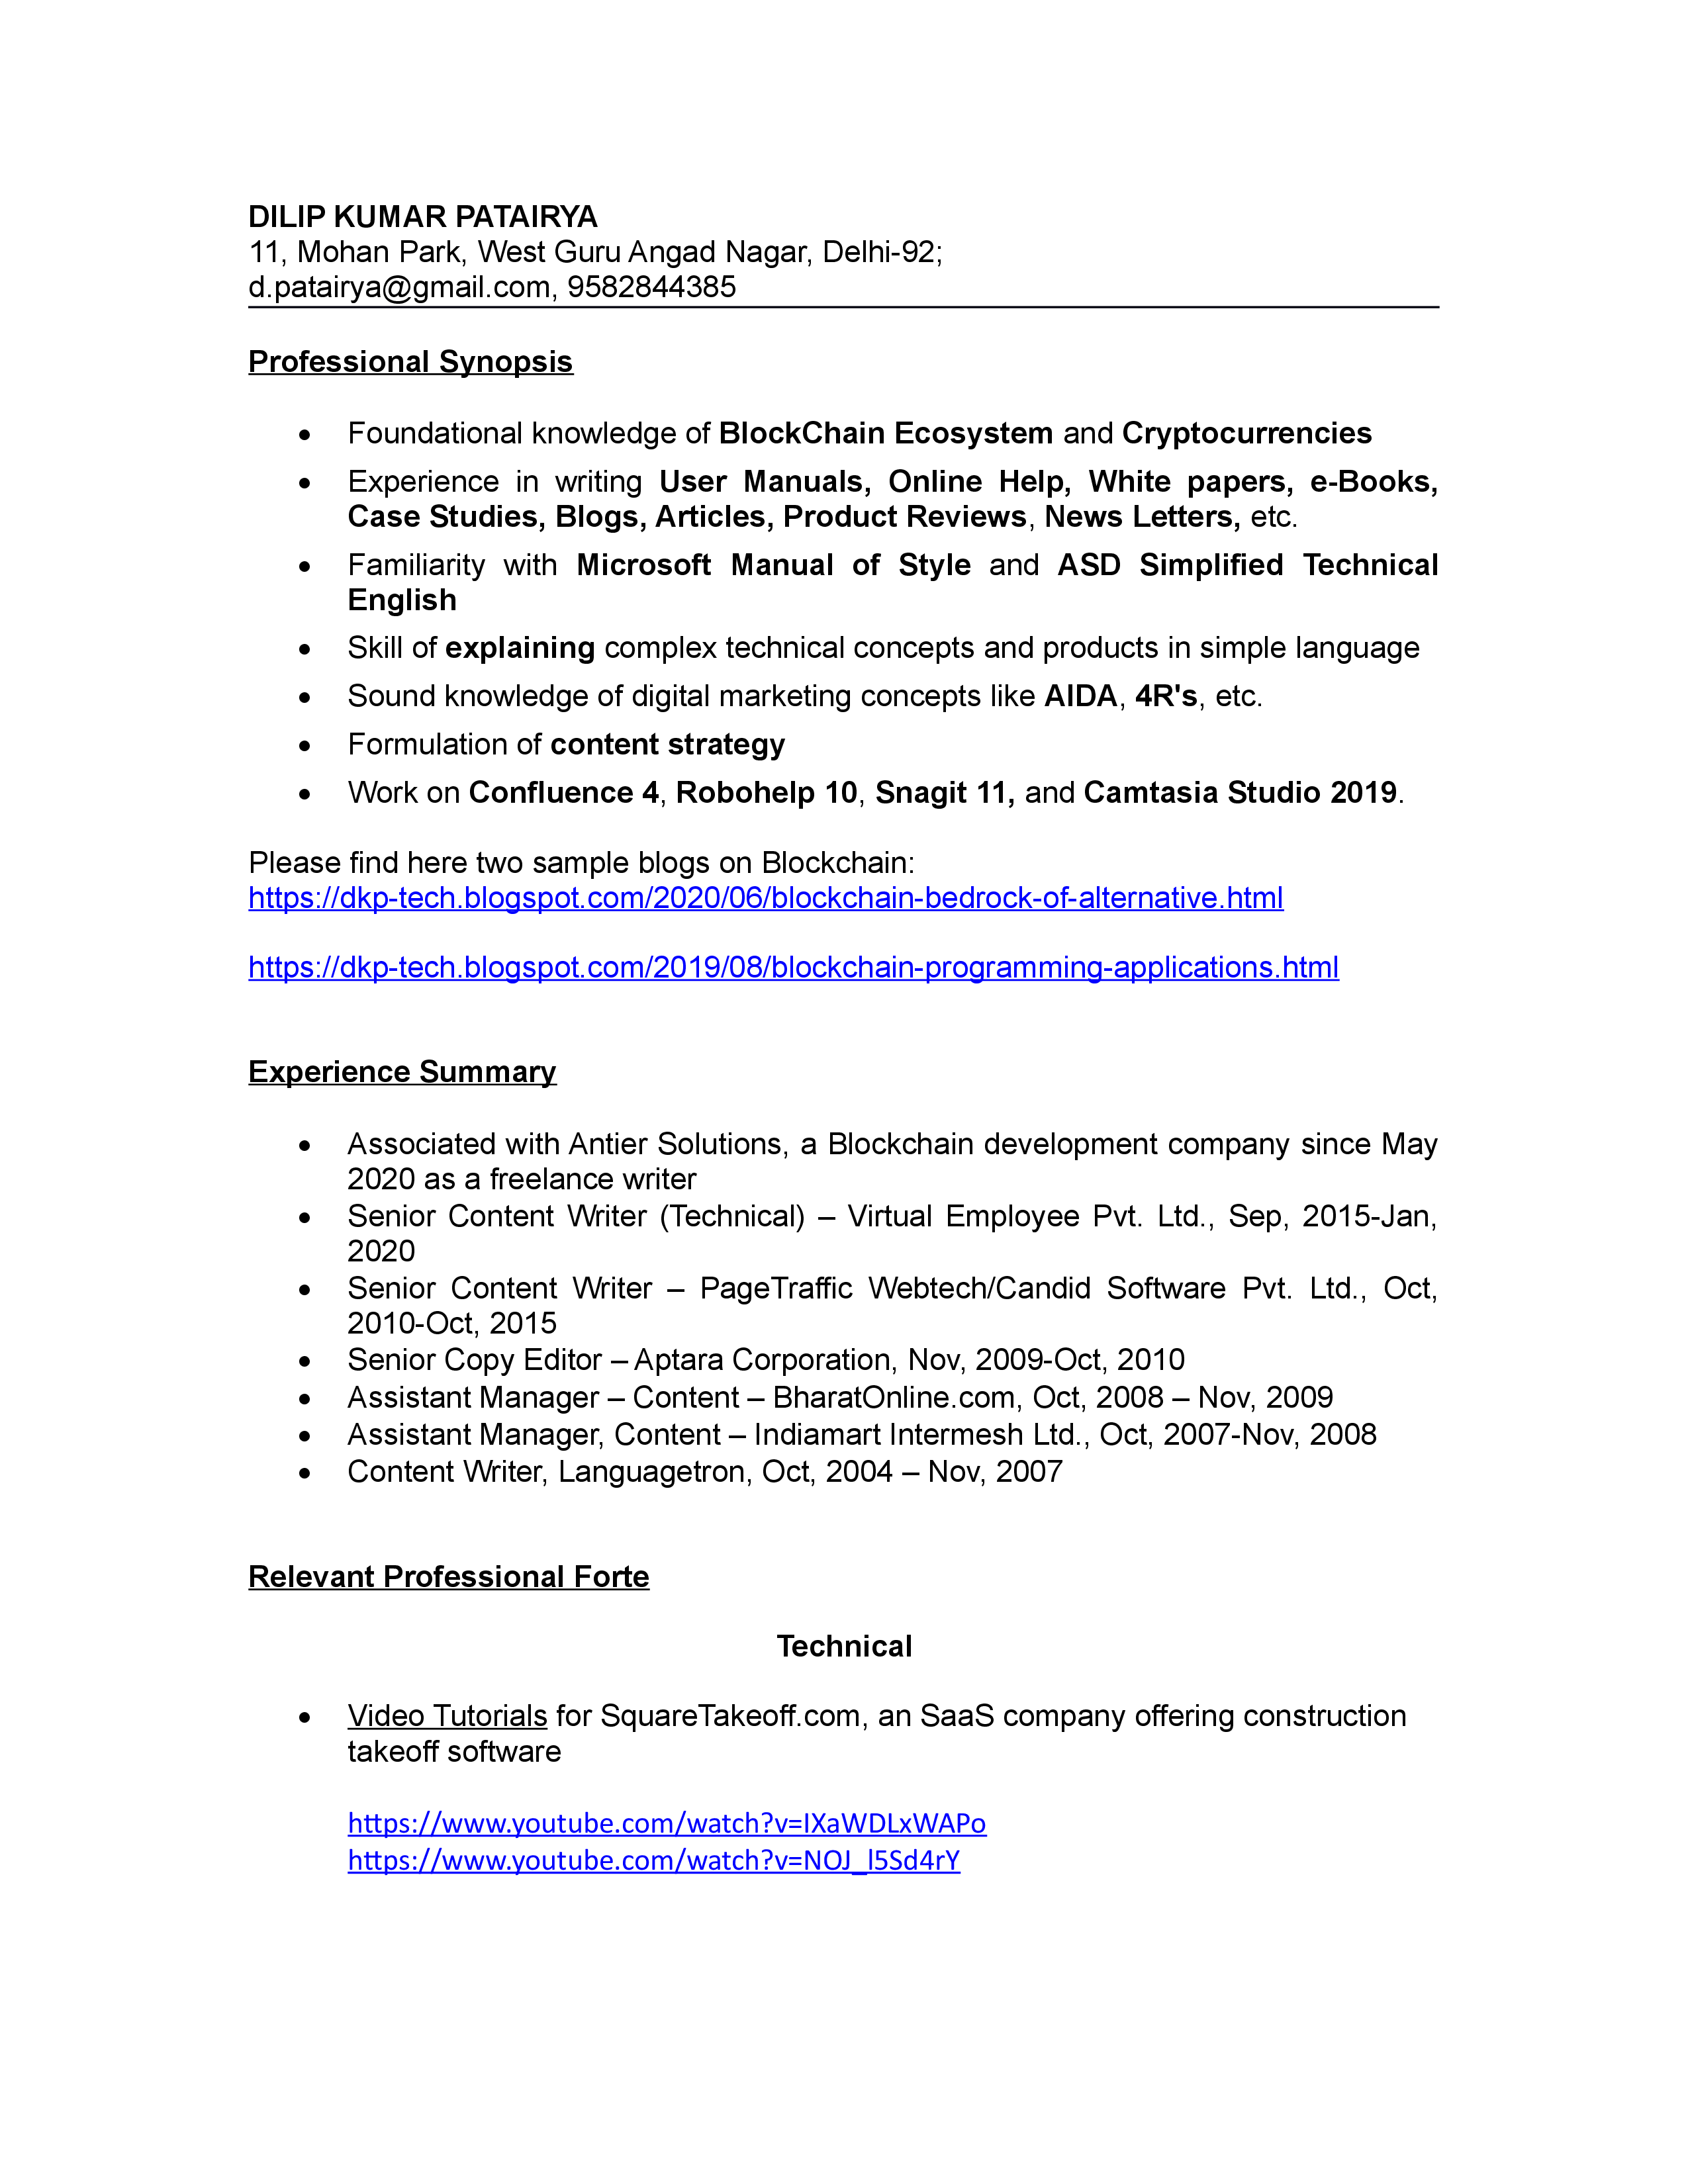 dilip-nimbus-resume2-page-0